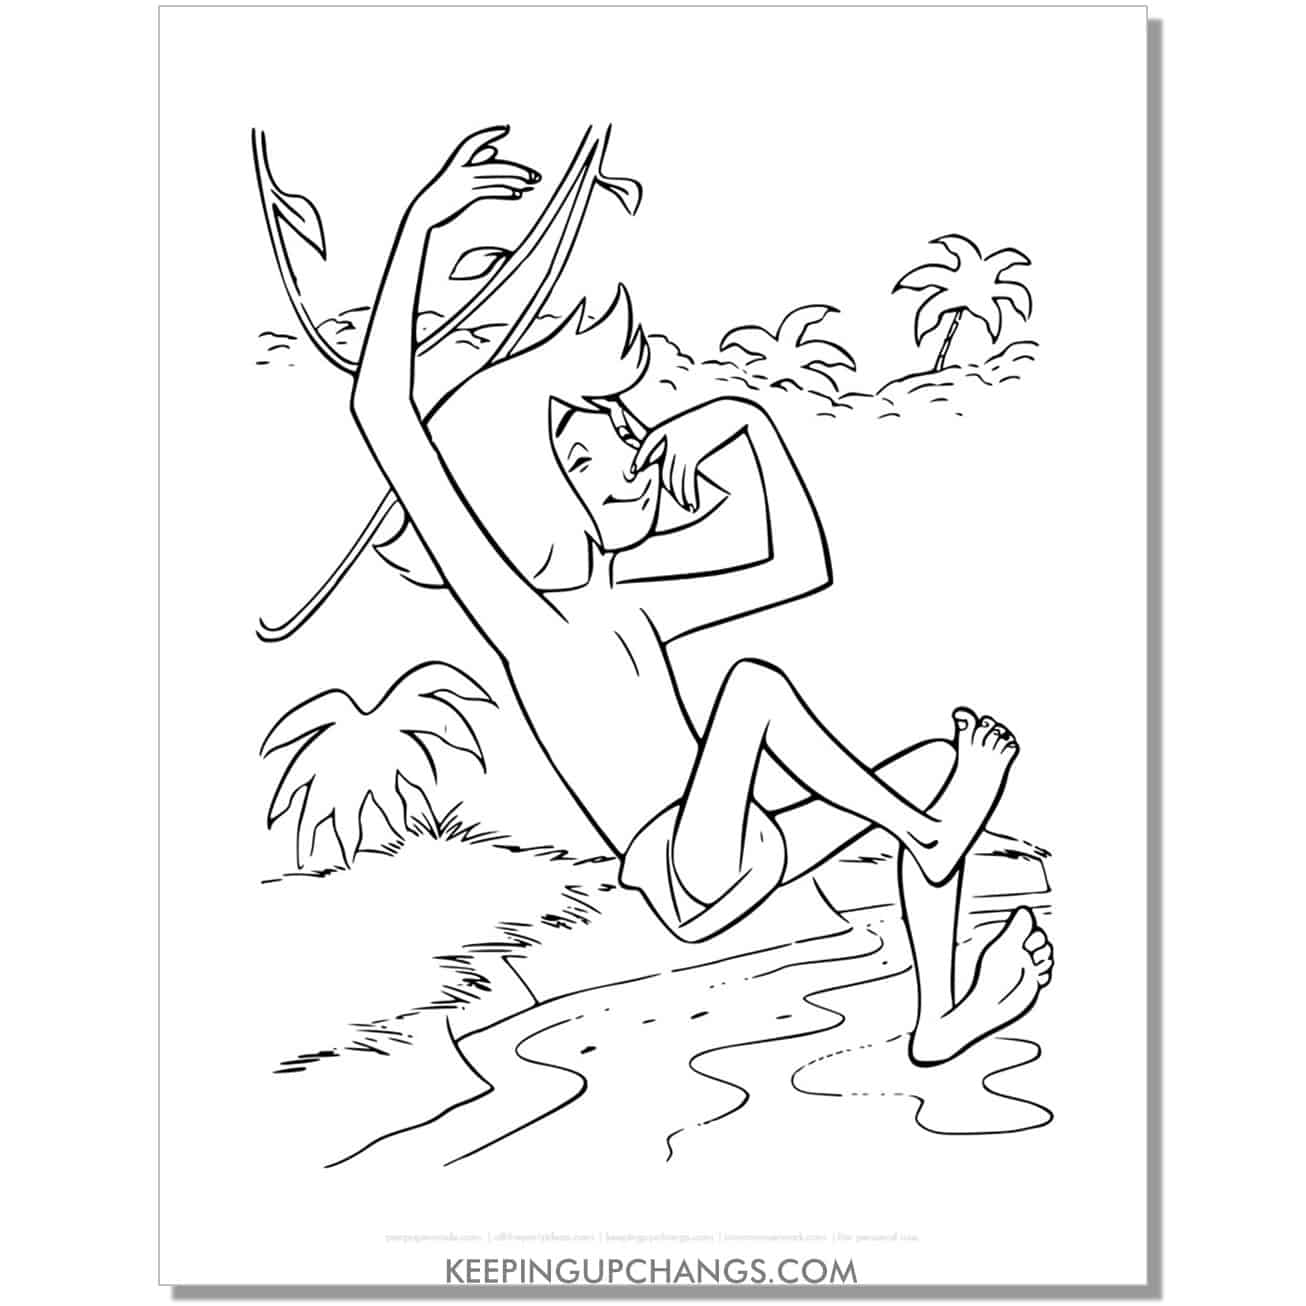 mowgli diving into river jungle book coloring page, sheet.